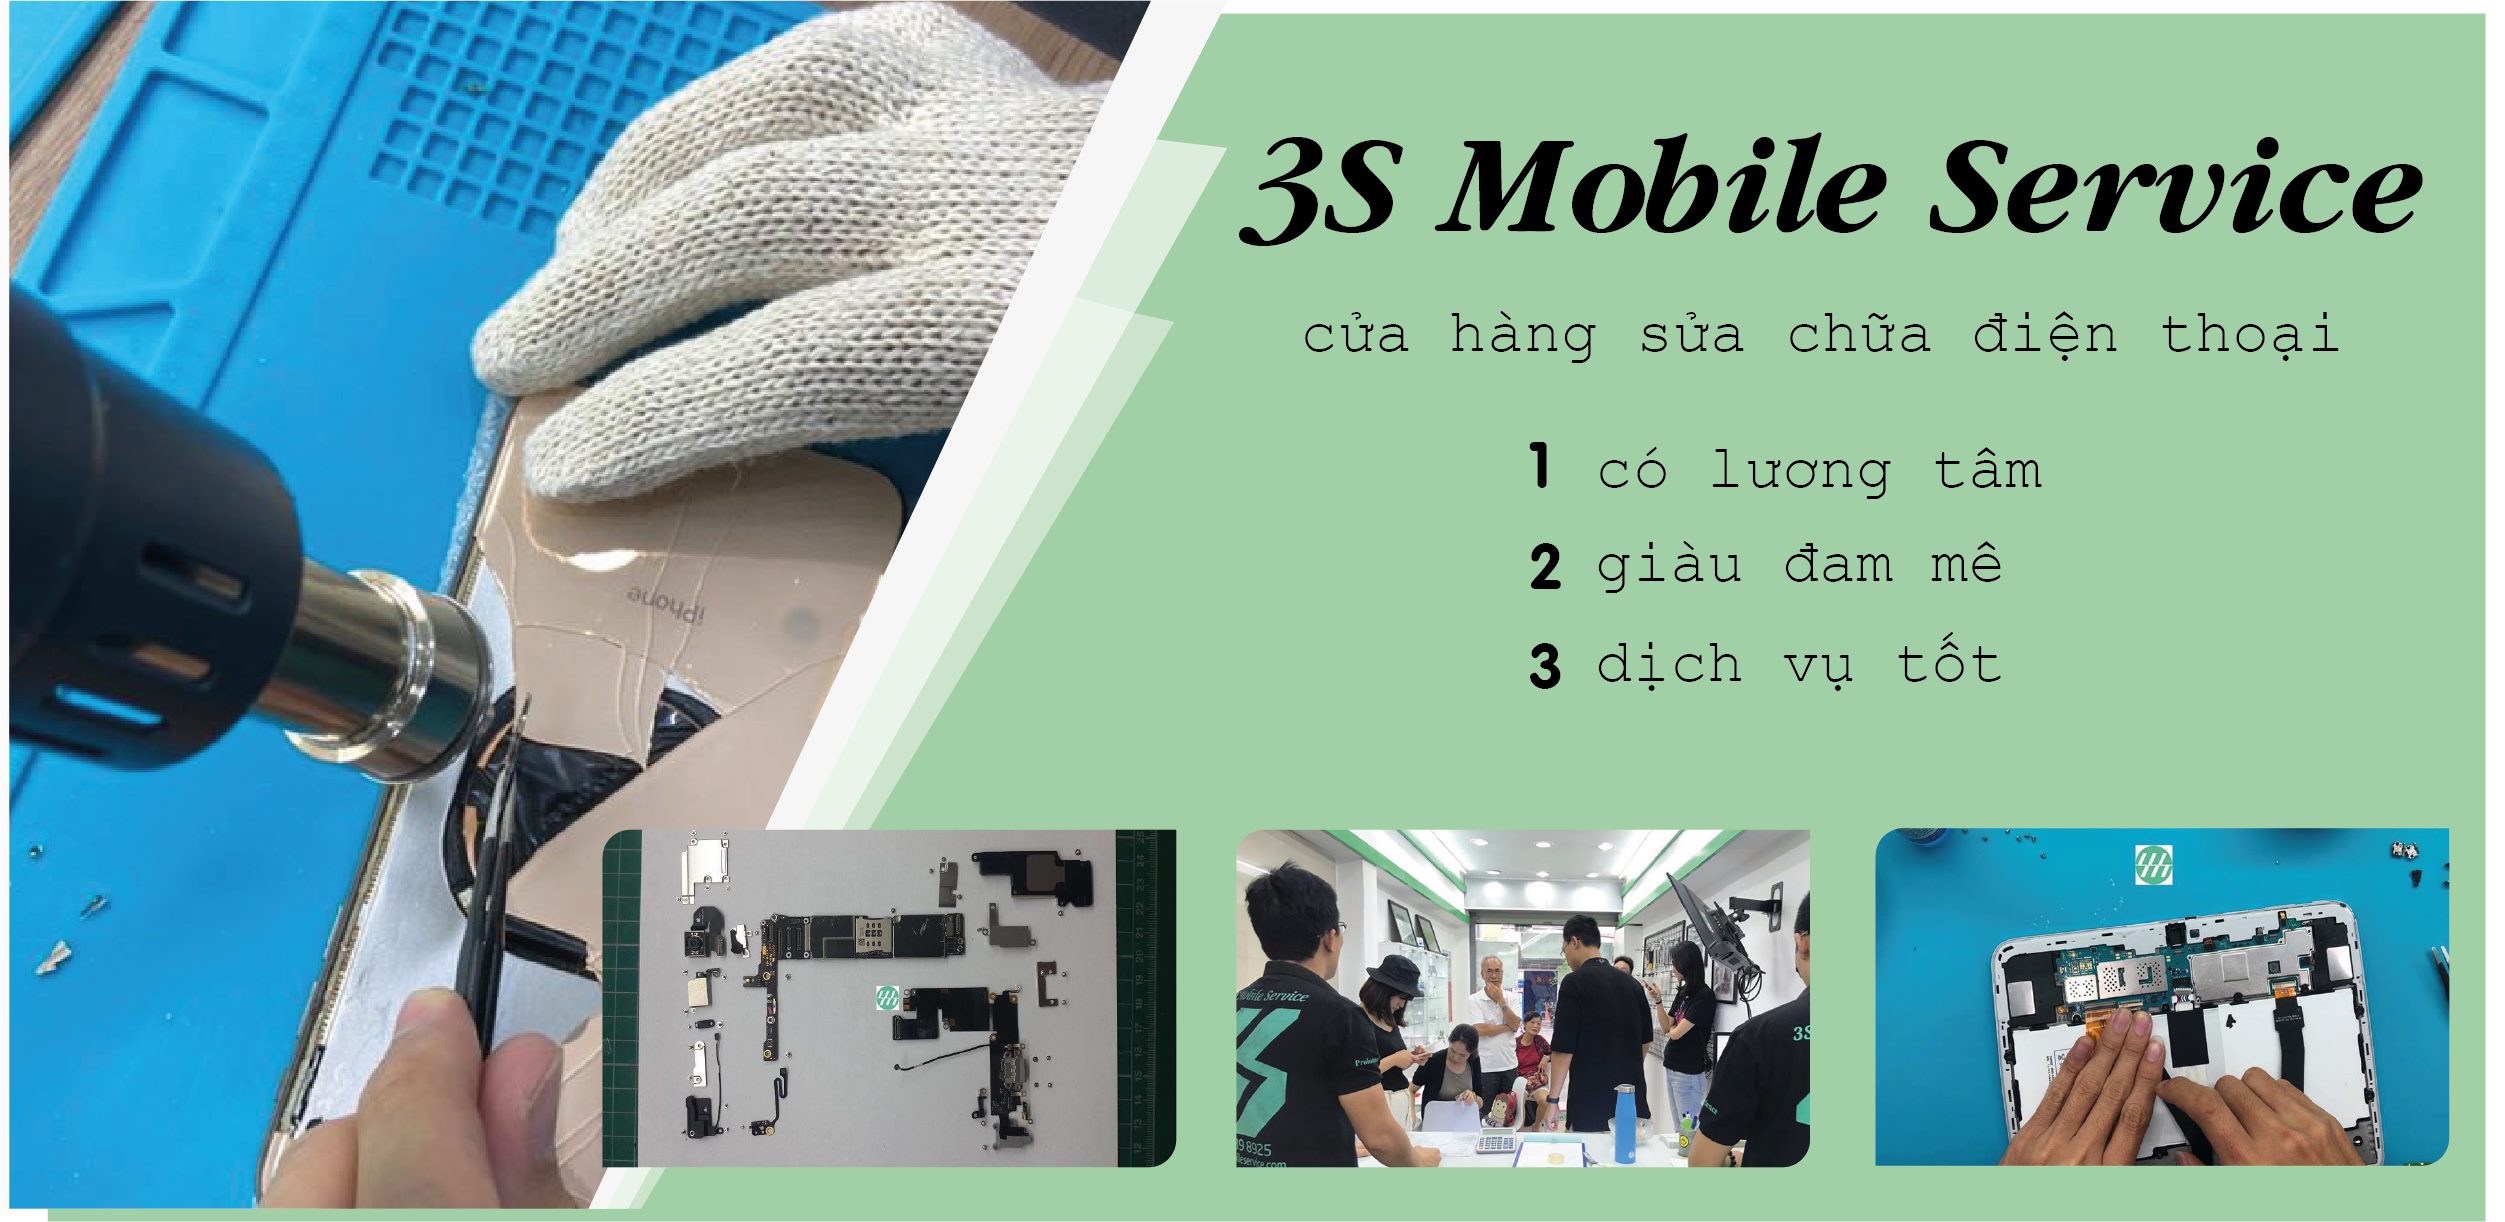 3S Mobile Service ảnh 1